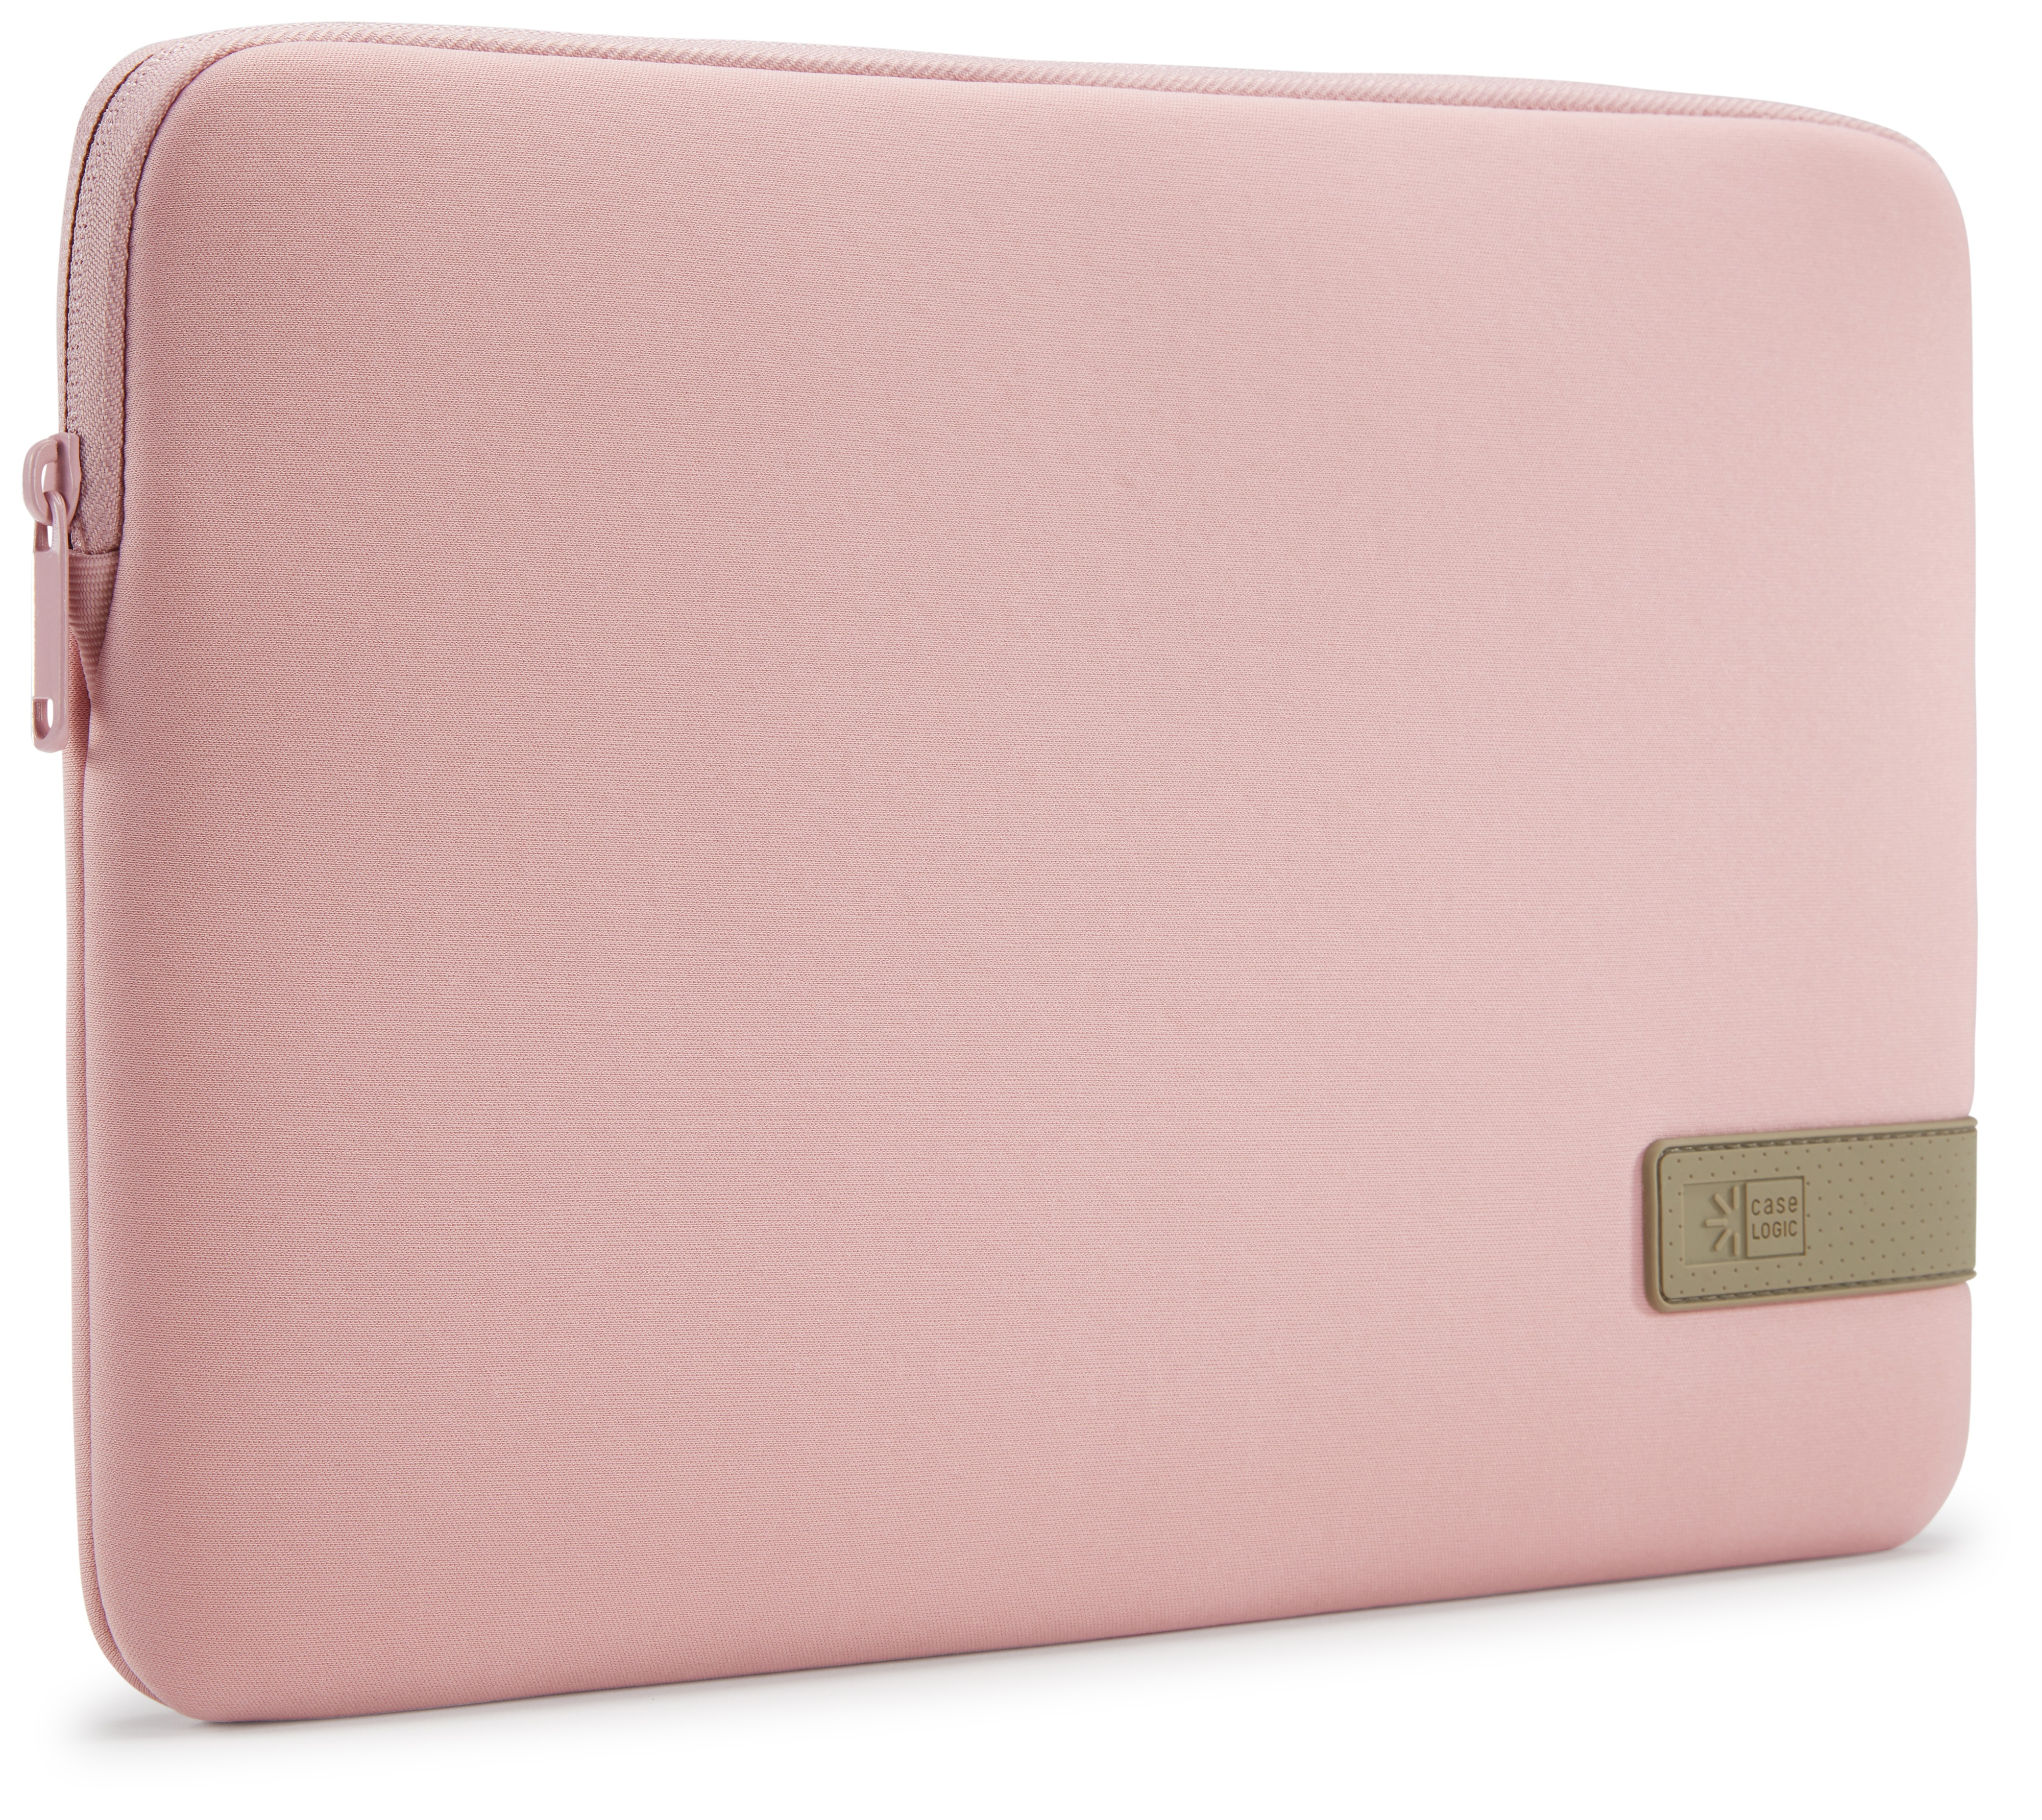 CASE LOGIC Reflect Notebook sleeve Pink/Mermaid Polyester, Sleeve Universal für Zephyr